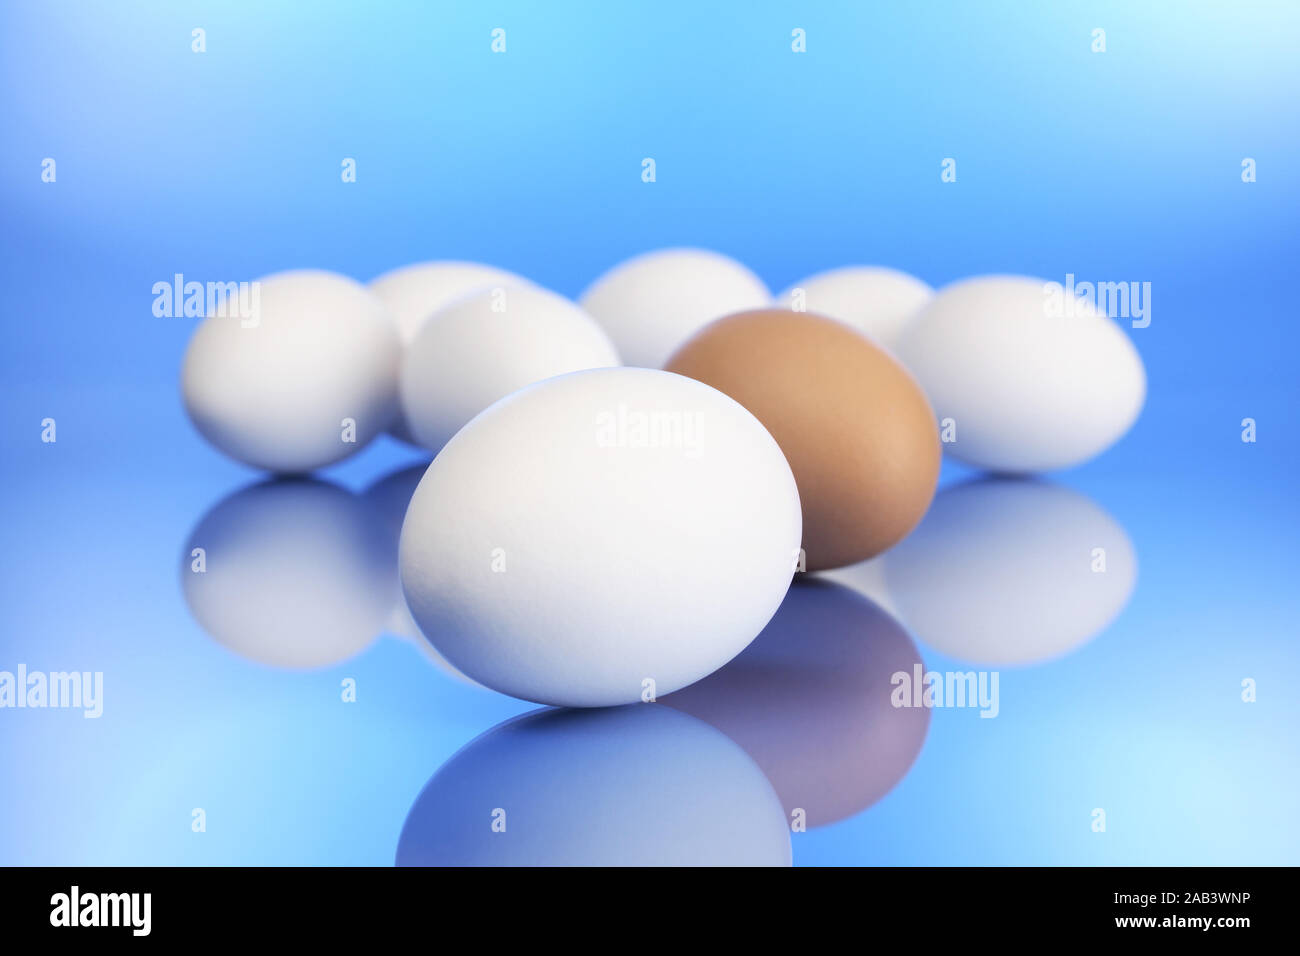 Frische Eier |Fresh eggs| Stock Photo